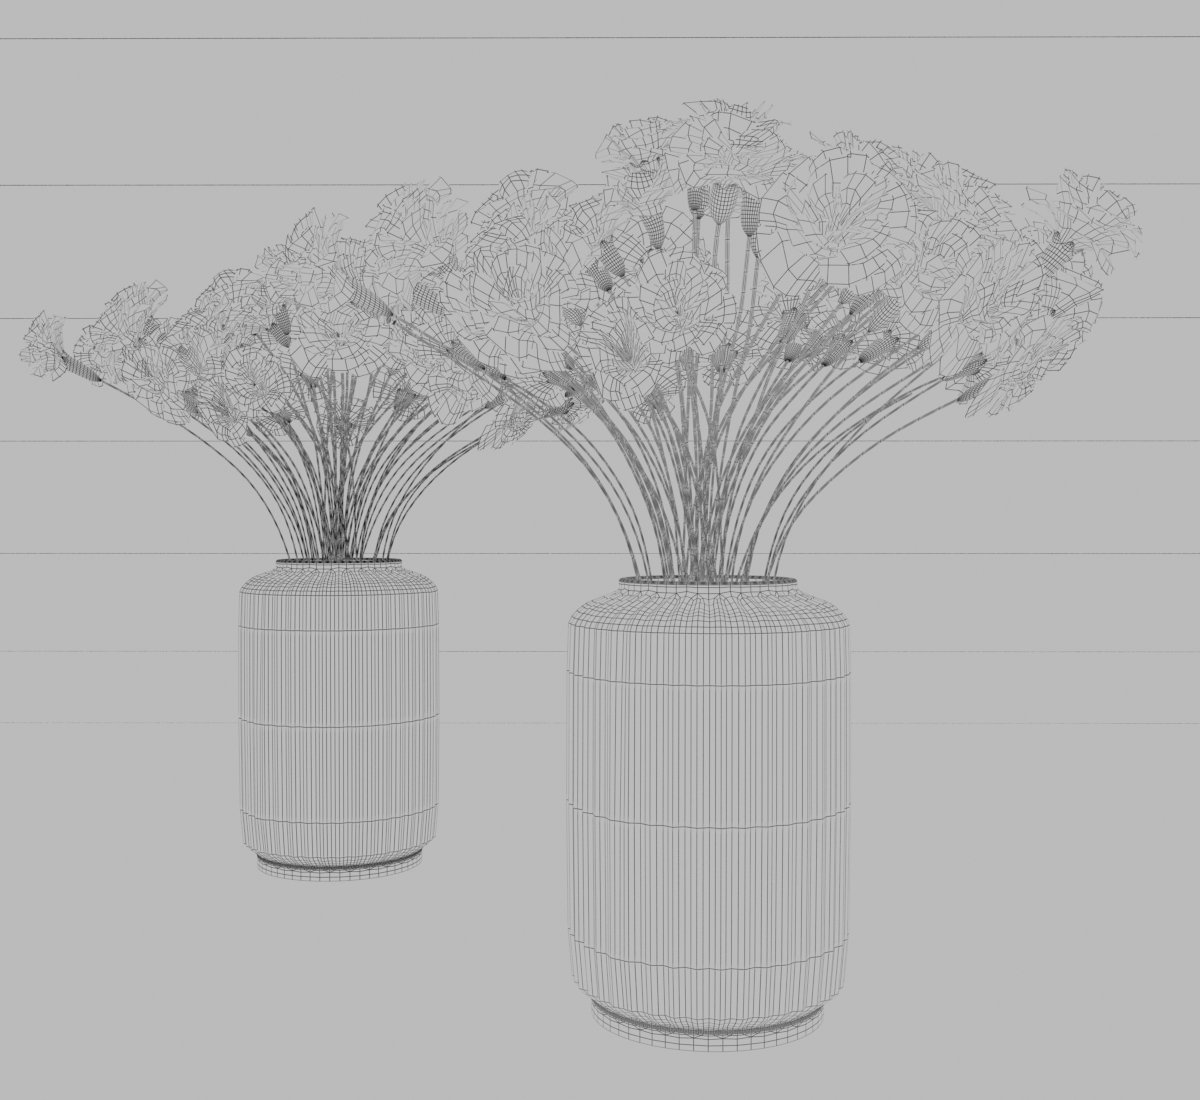 STILREN Vase, blanc - IKEA